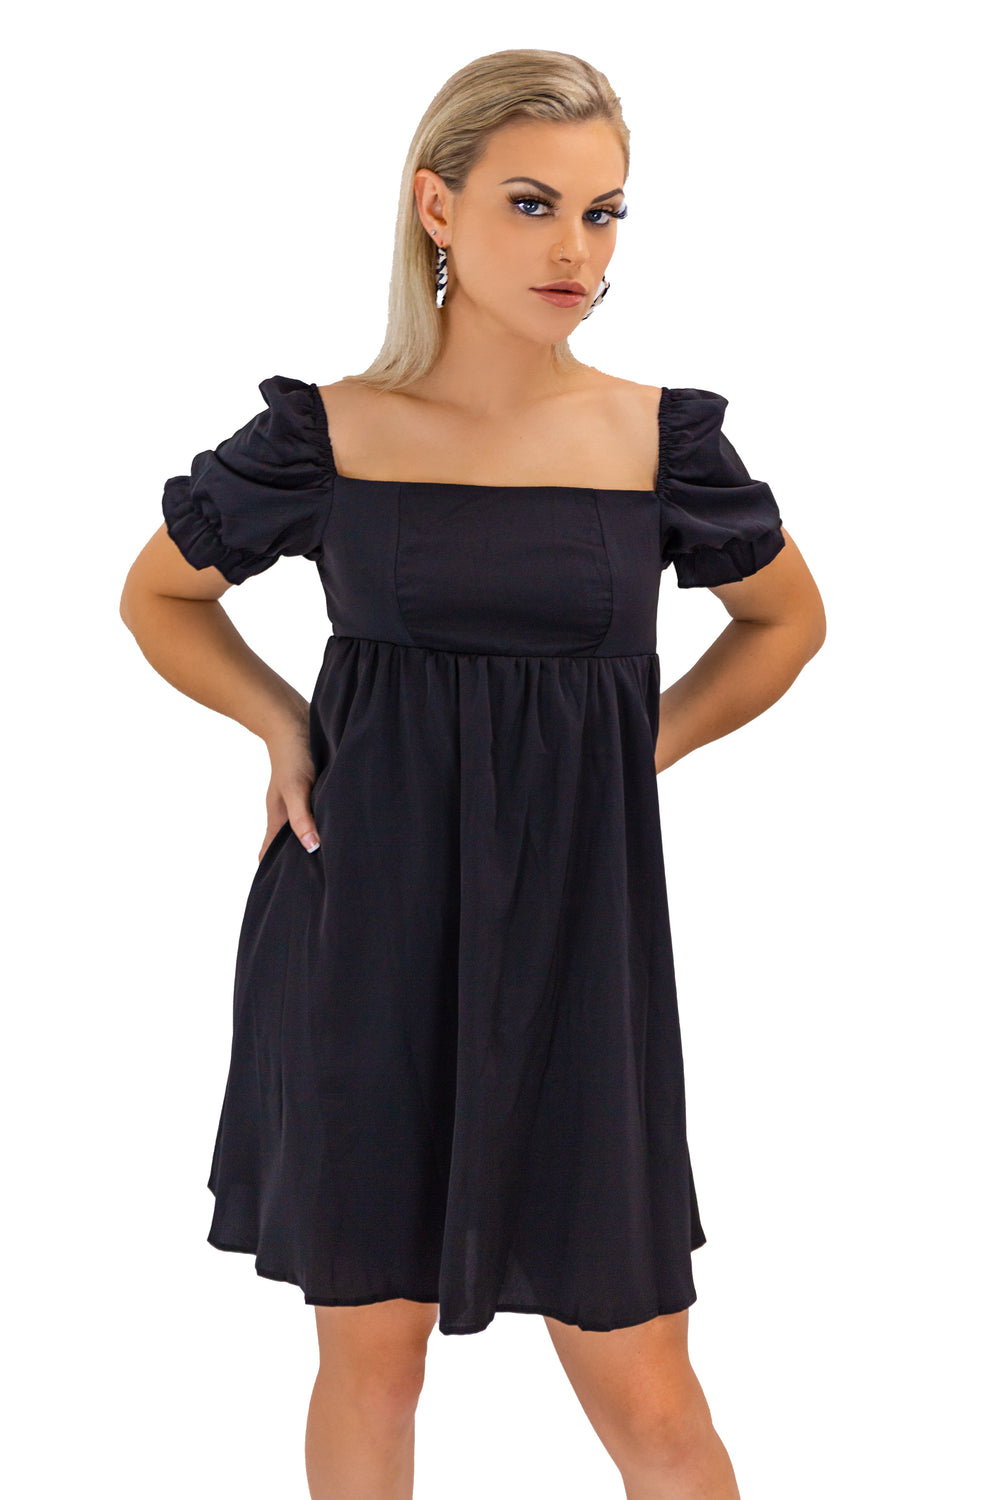 Sweetheart Neckline Black Mini Dress